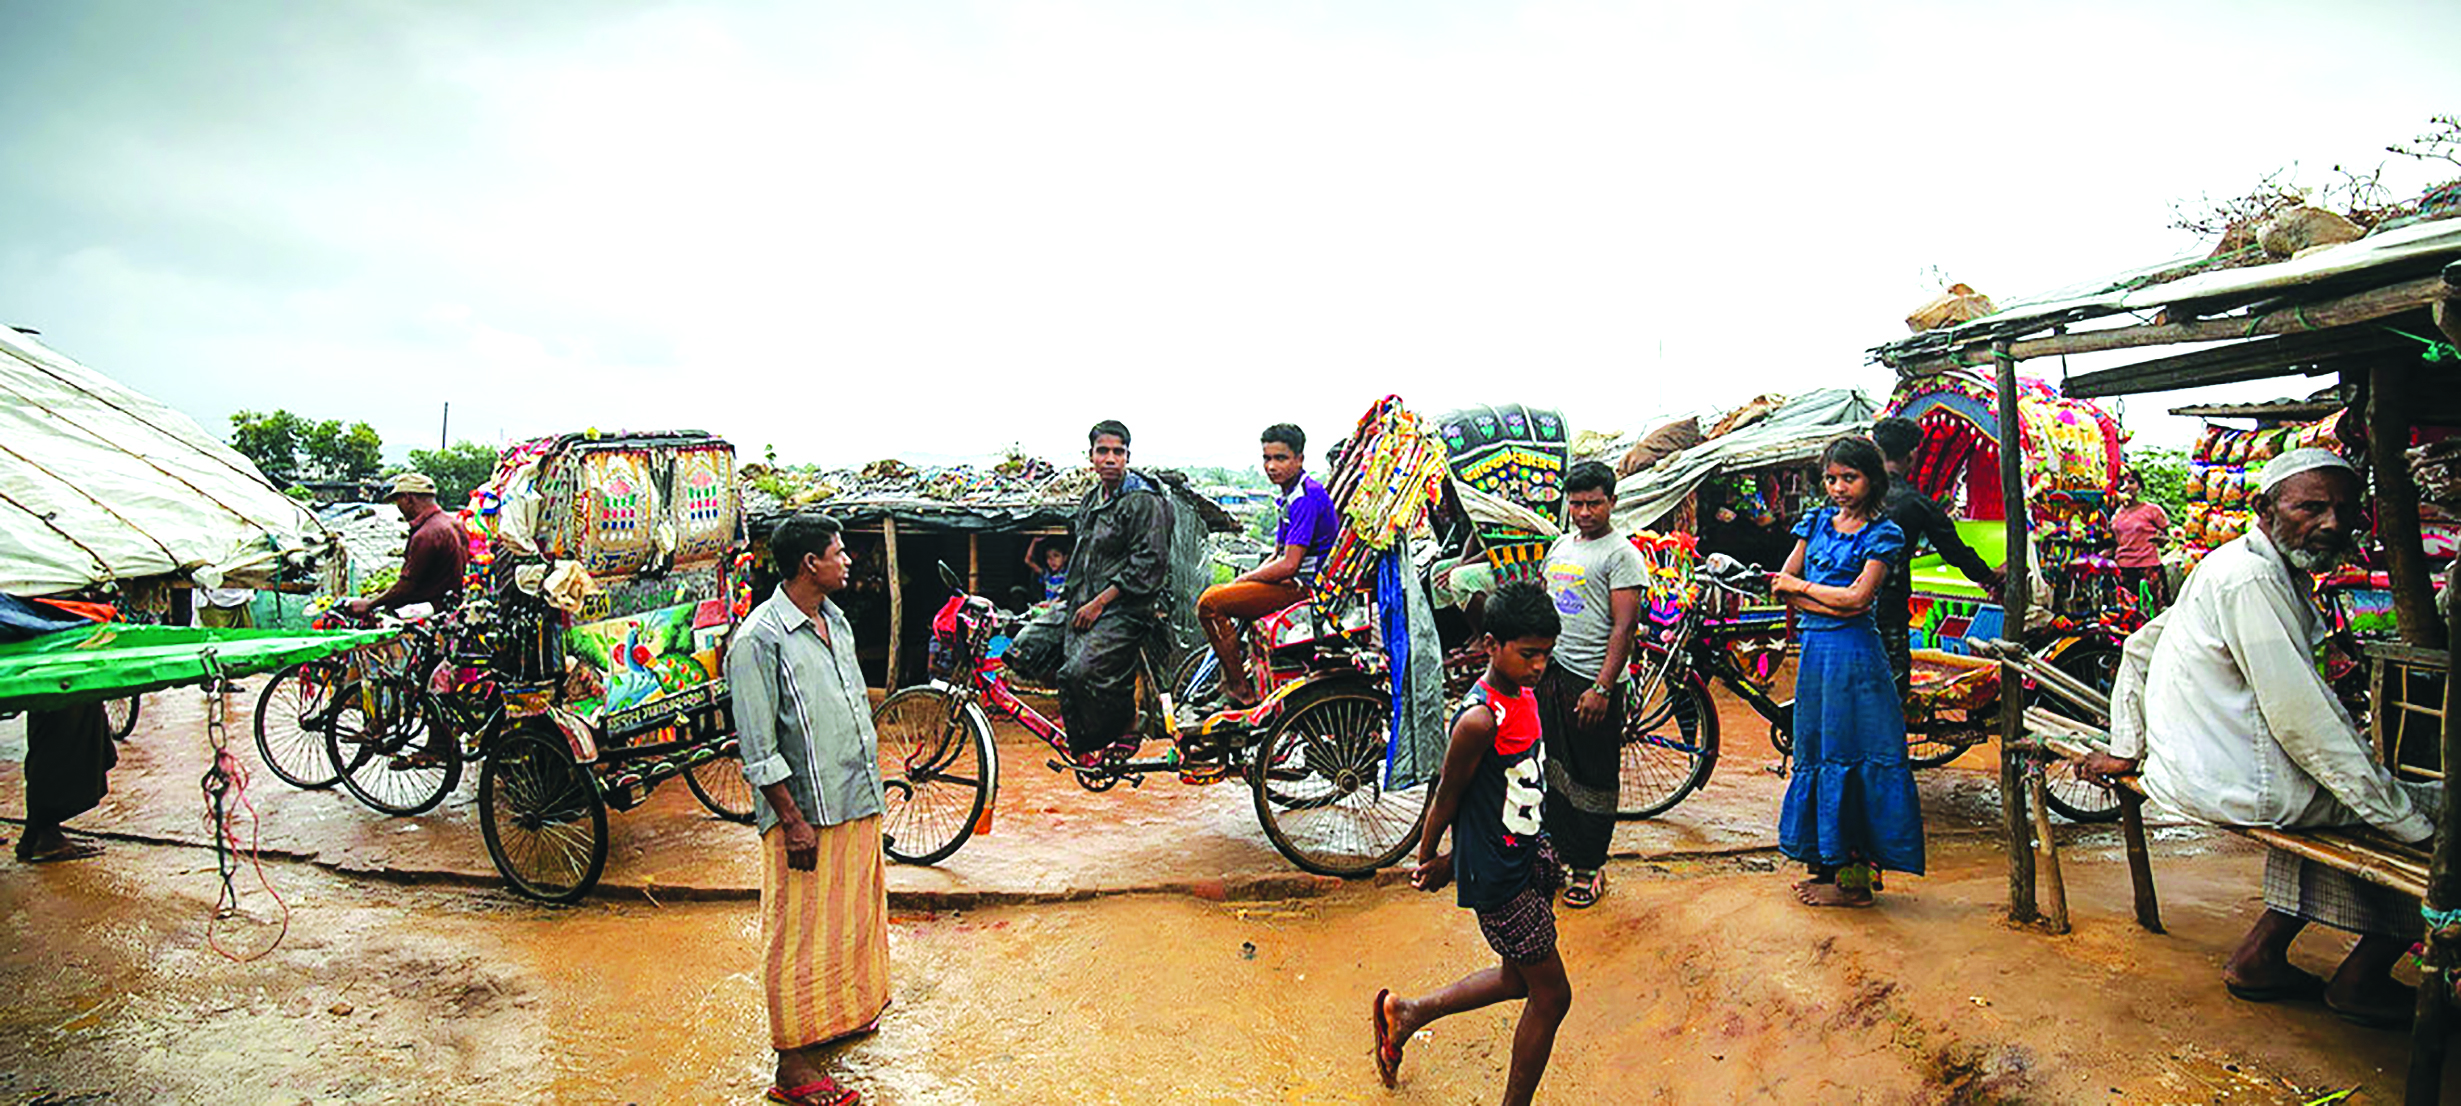 Мусульмане-рохинджа: дорога из Мьянмыв Бангладеш. Год спустя